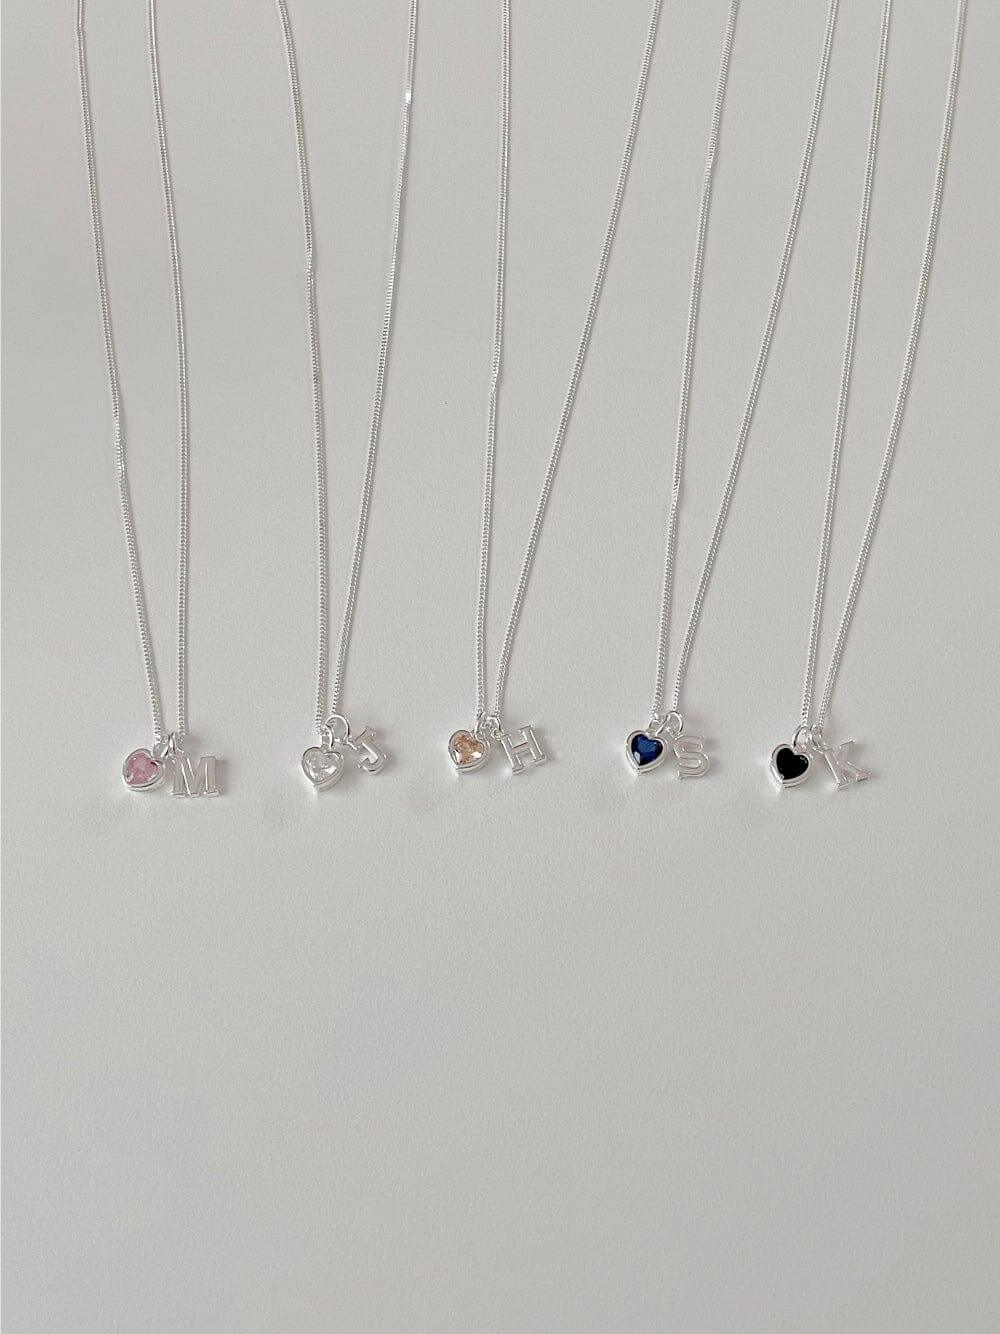 [925 Silver]イニシャル ハート キュービックネックレス / オーダーメイド necklace bling moon 